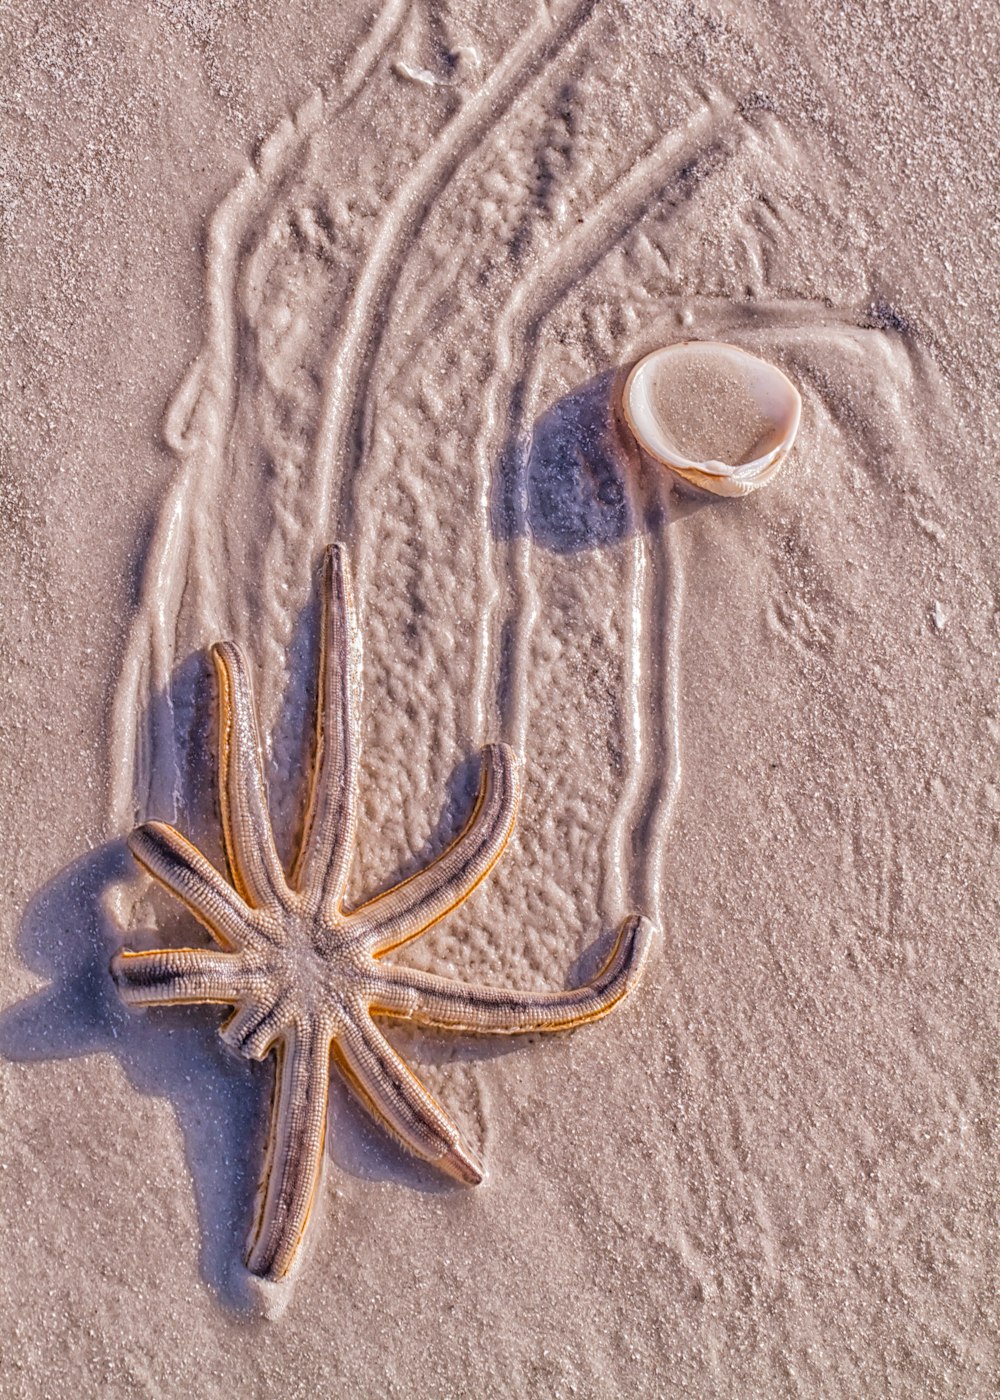 a starfish on a sandy beach next to a shell